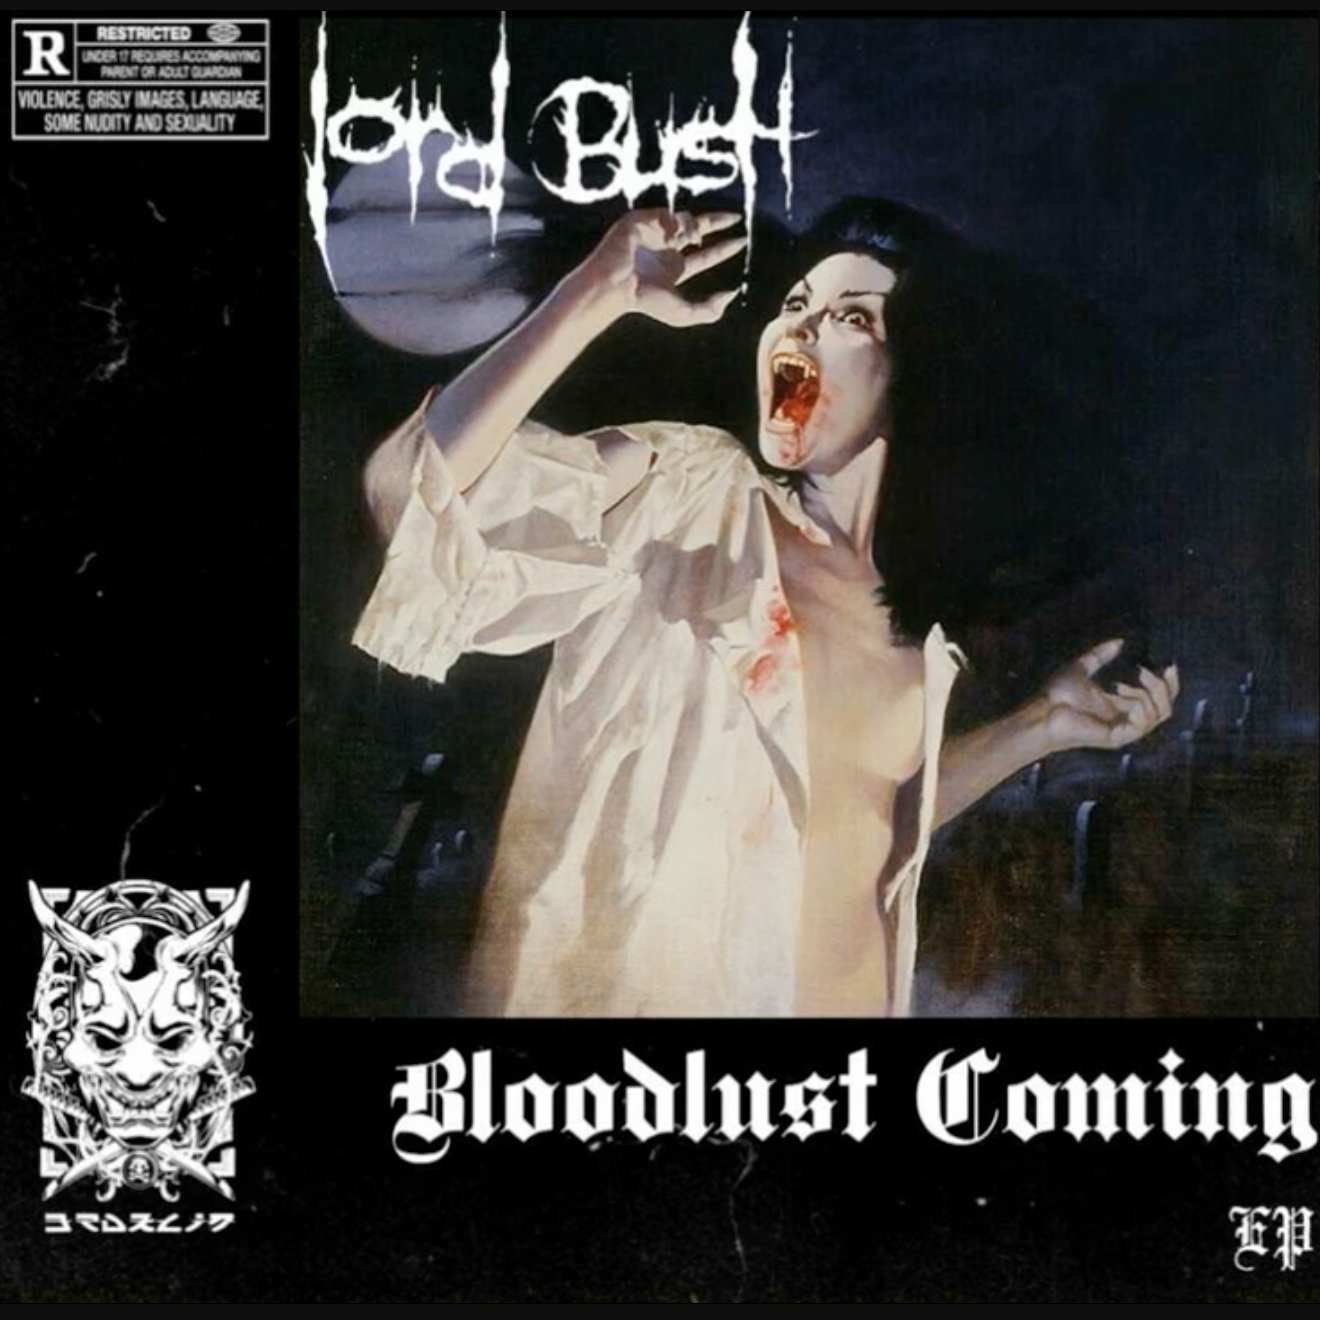 29 Lord Bush - Ep Bloodlust